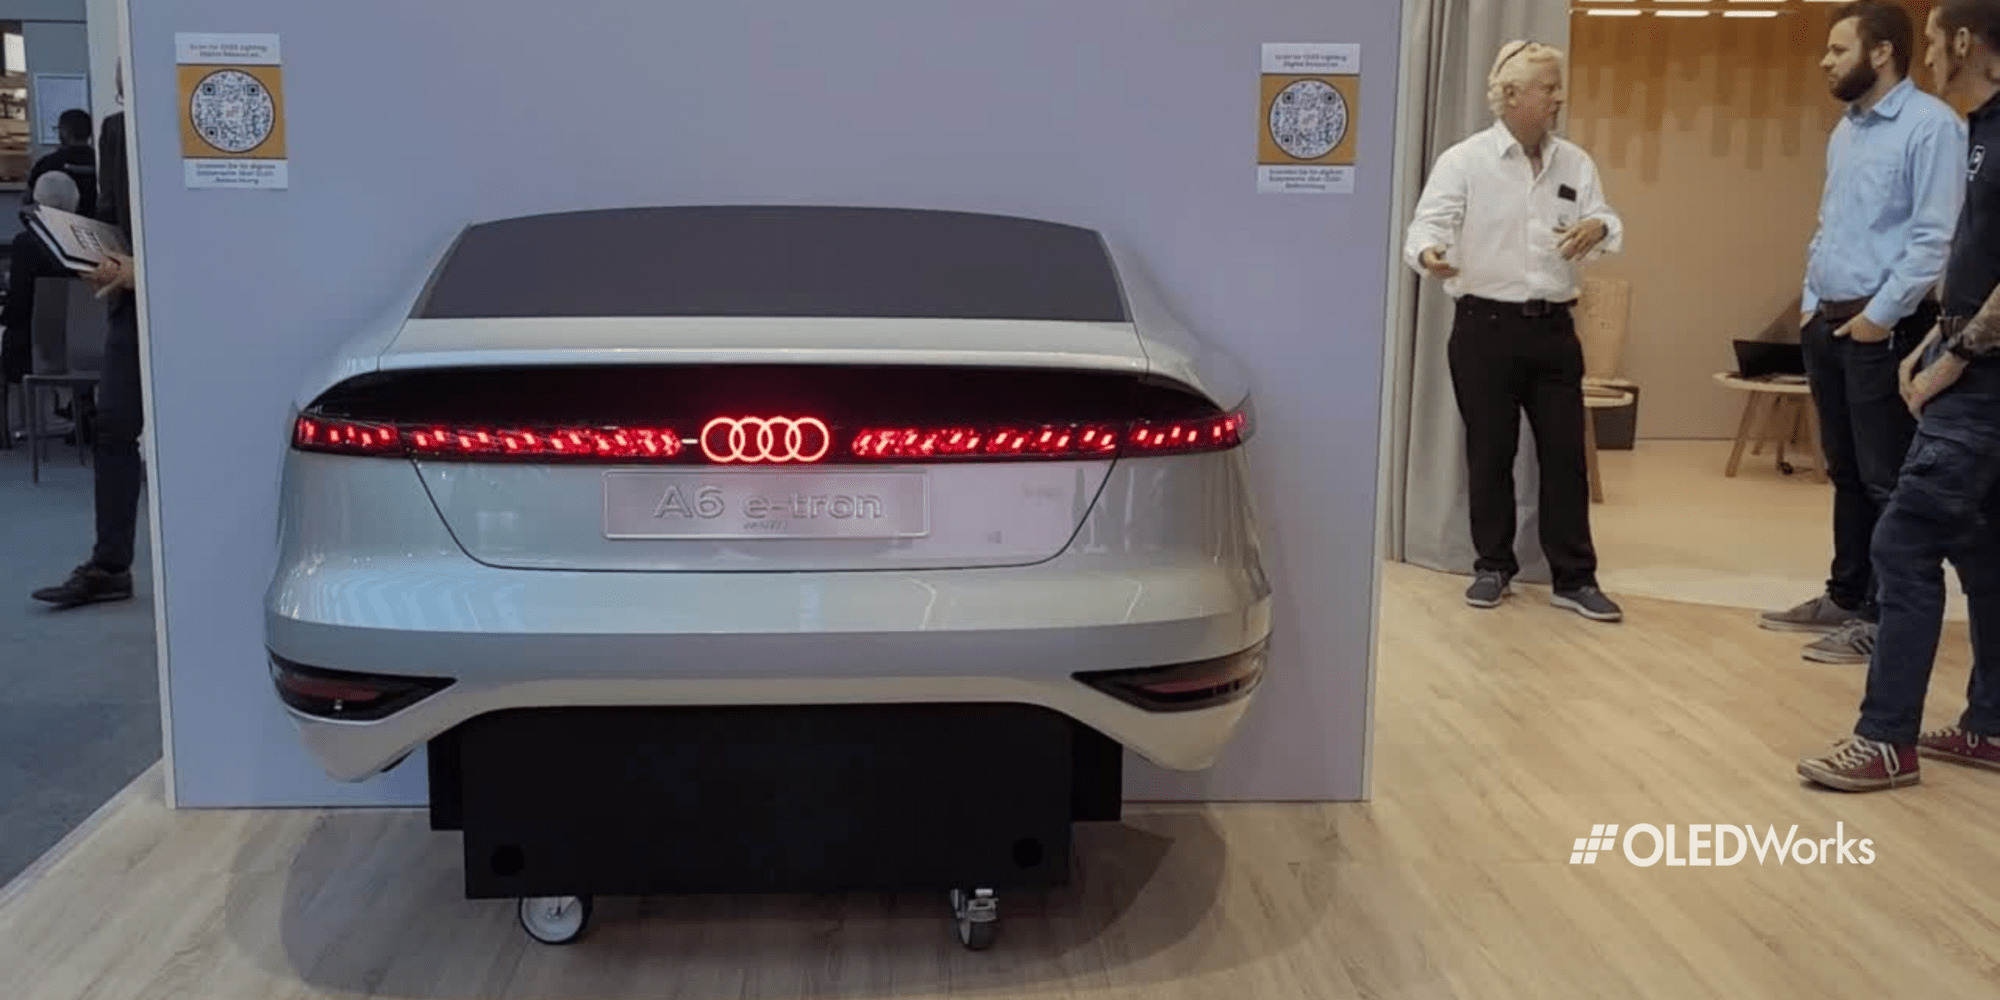 Audi A6 E-tron Demonstrator | OLEDWorks